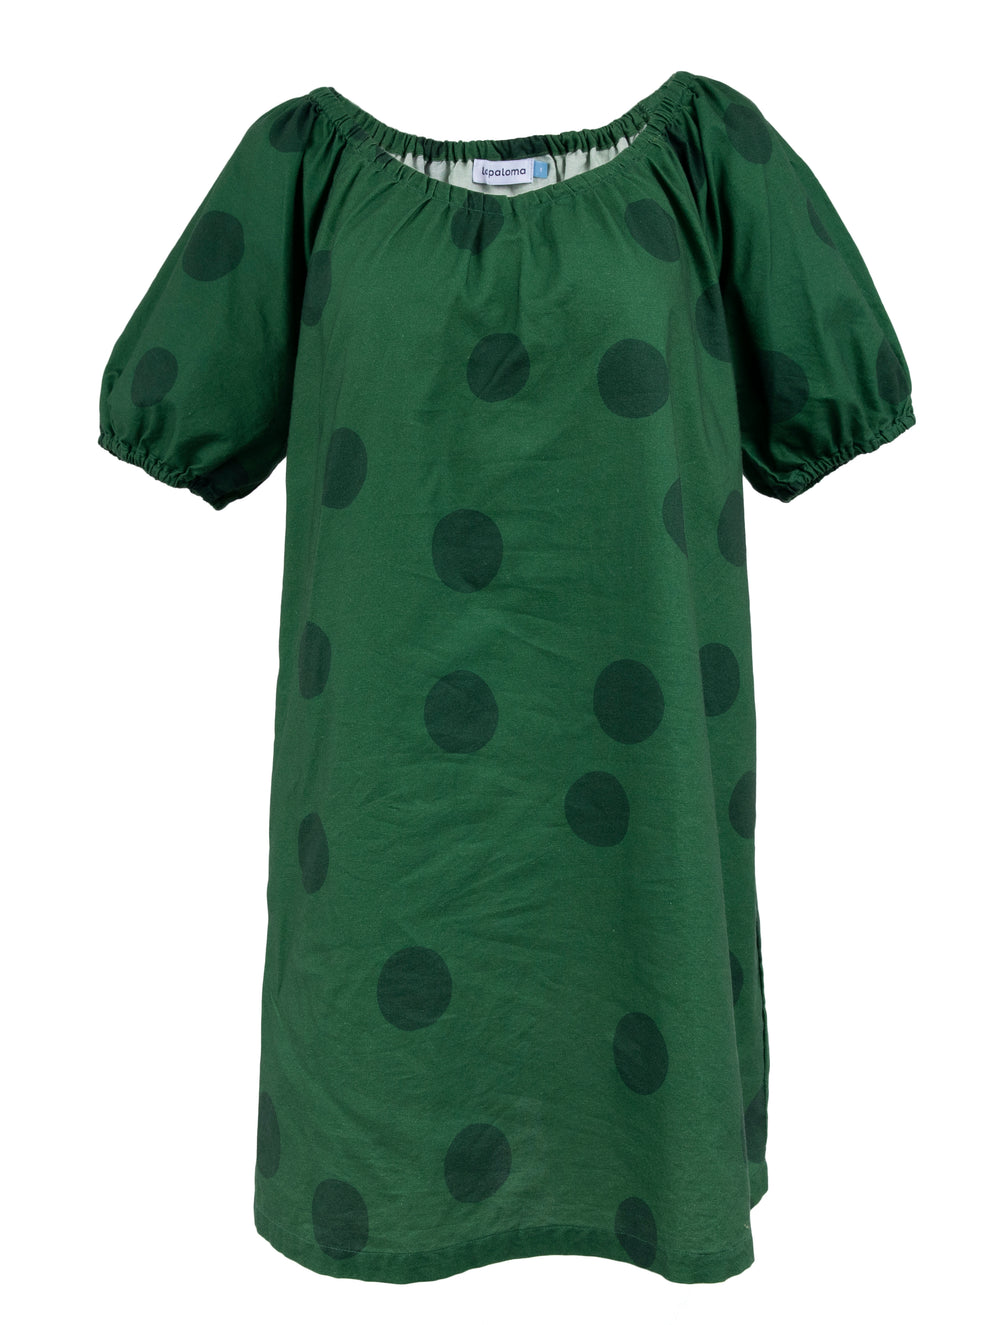 Women's Parker House Dress in Evergreen Dot